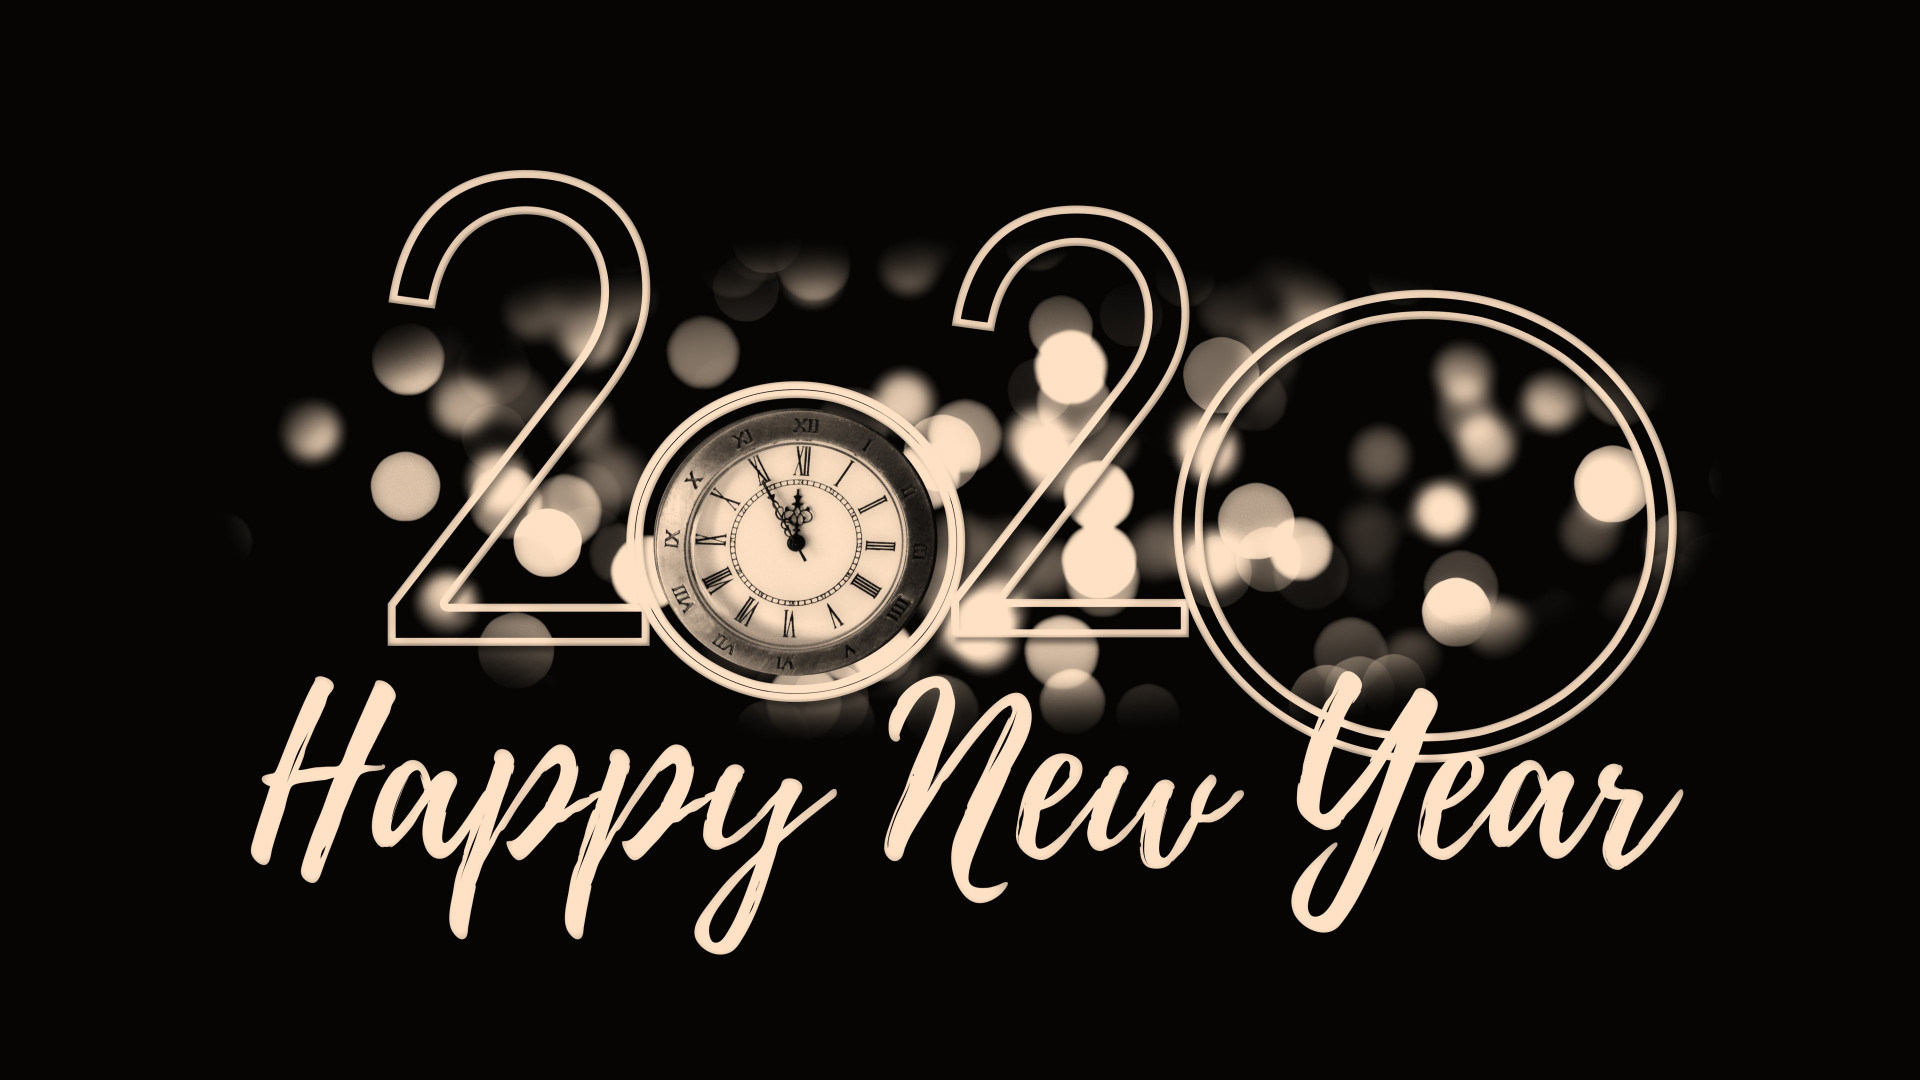 2020 Happy New Year wallpaper 1920x1080